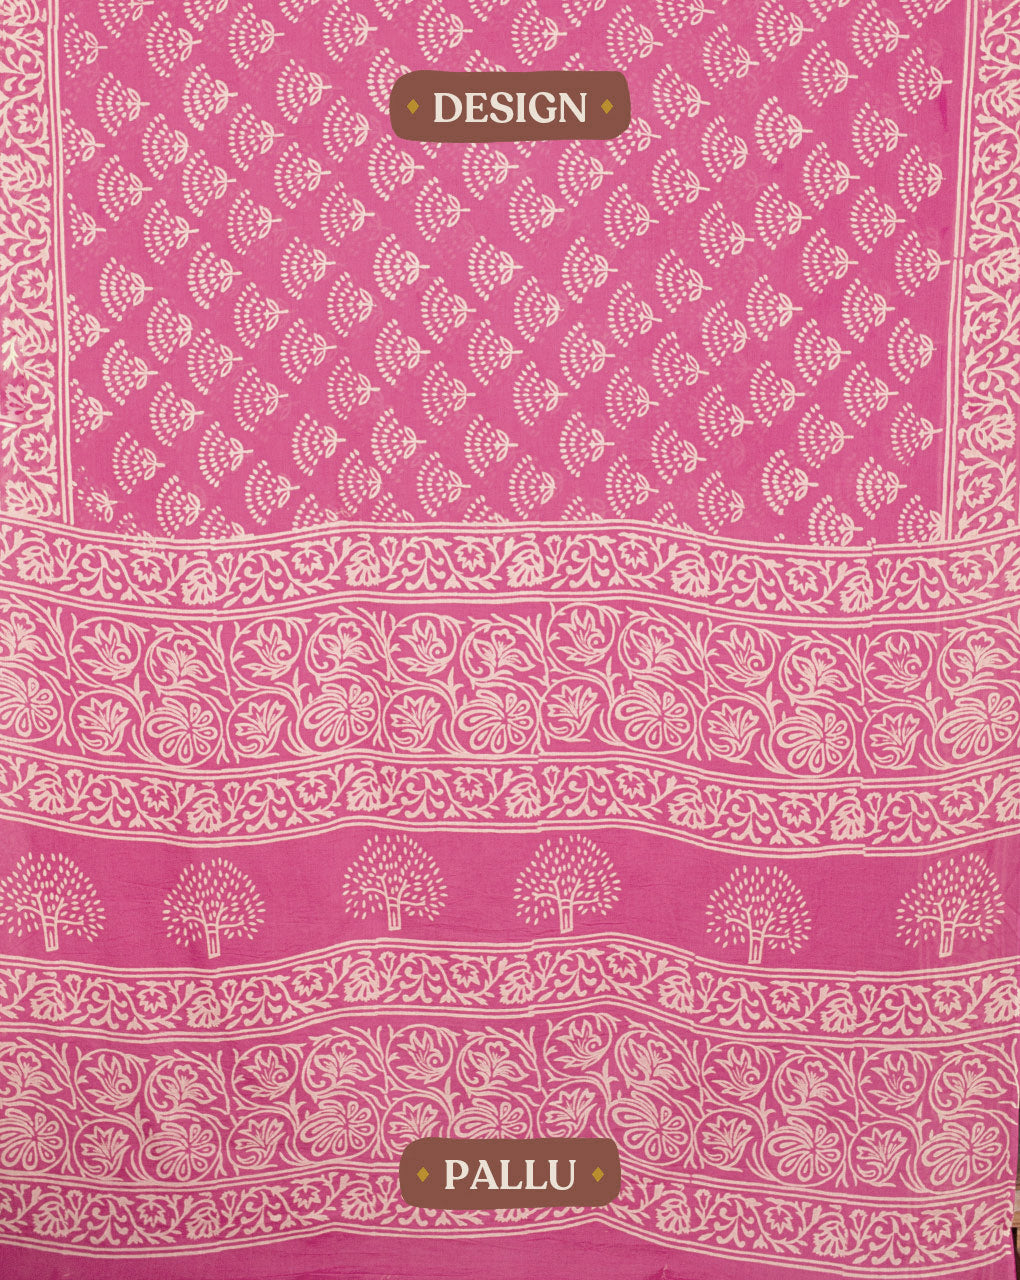 Hand Block Cotton Saree With Blouse - Fabriclore.com